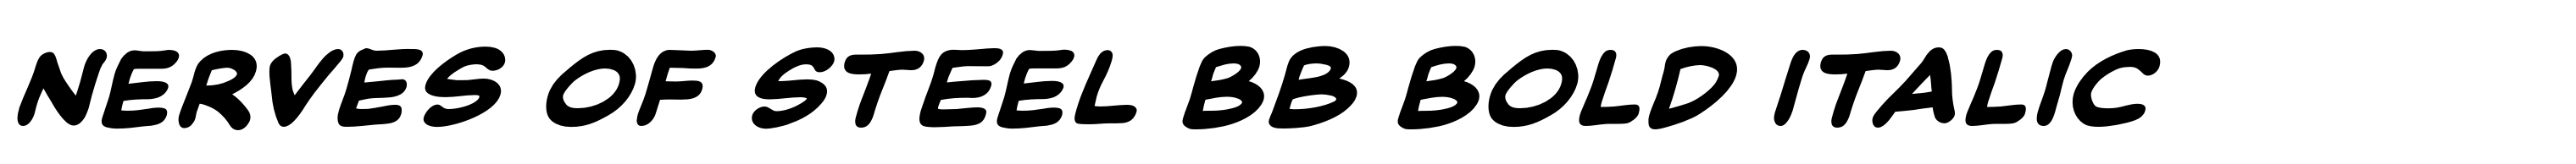 Nerves of Steel BB Bold Italic